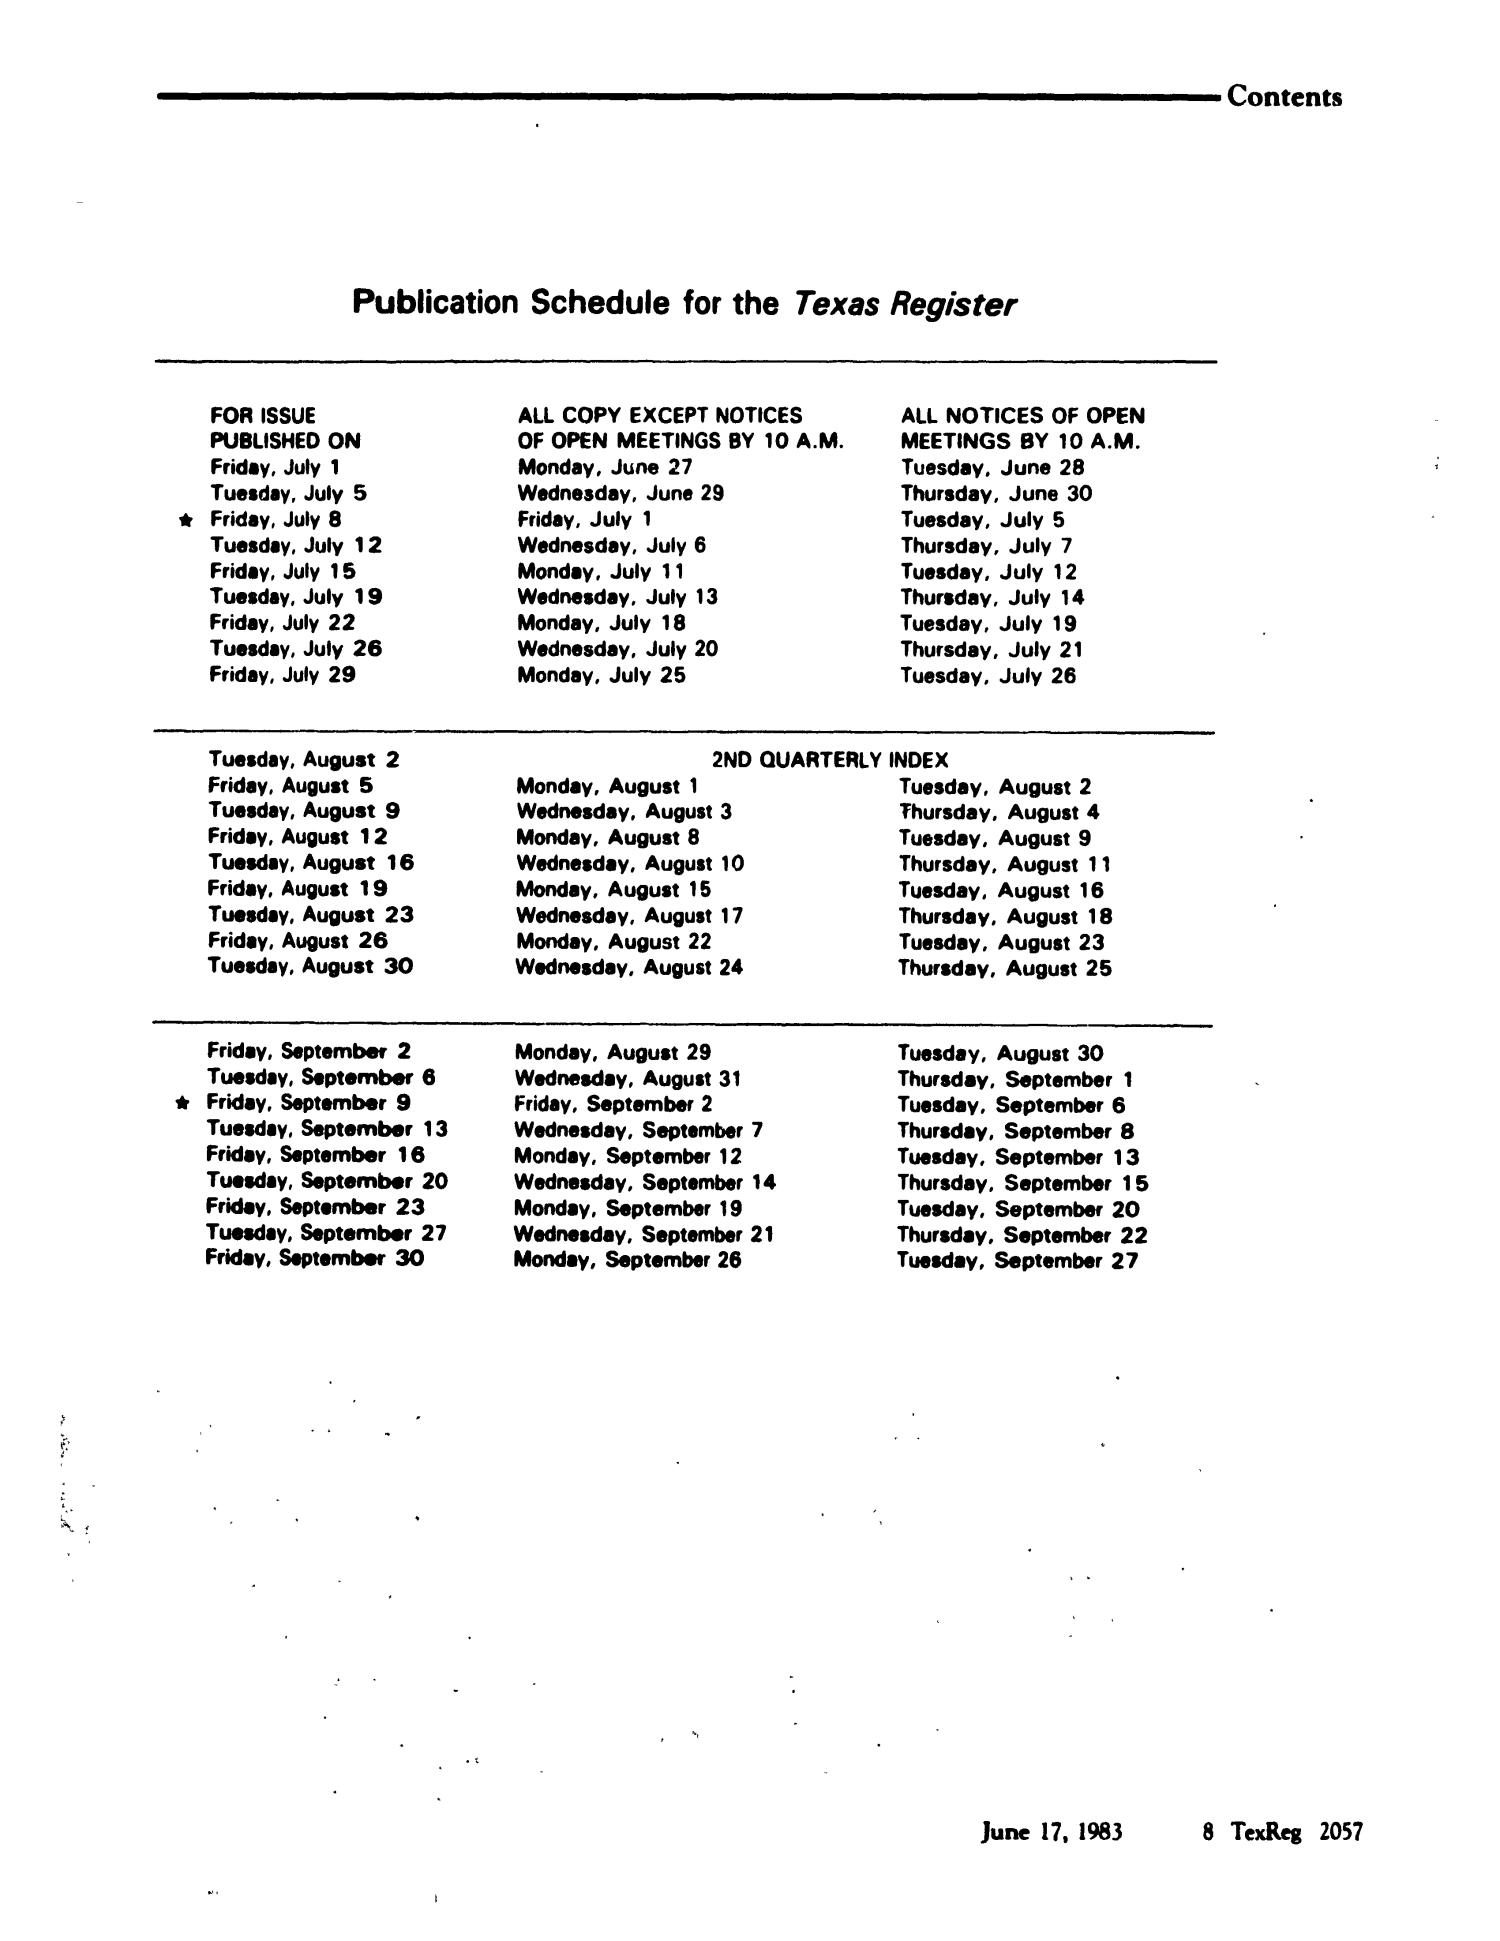 Texas Register, Volume 8, Number 43, Pages 2053-2104, June 17, 1983
                                                
                                                    2057
                                                